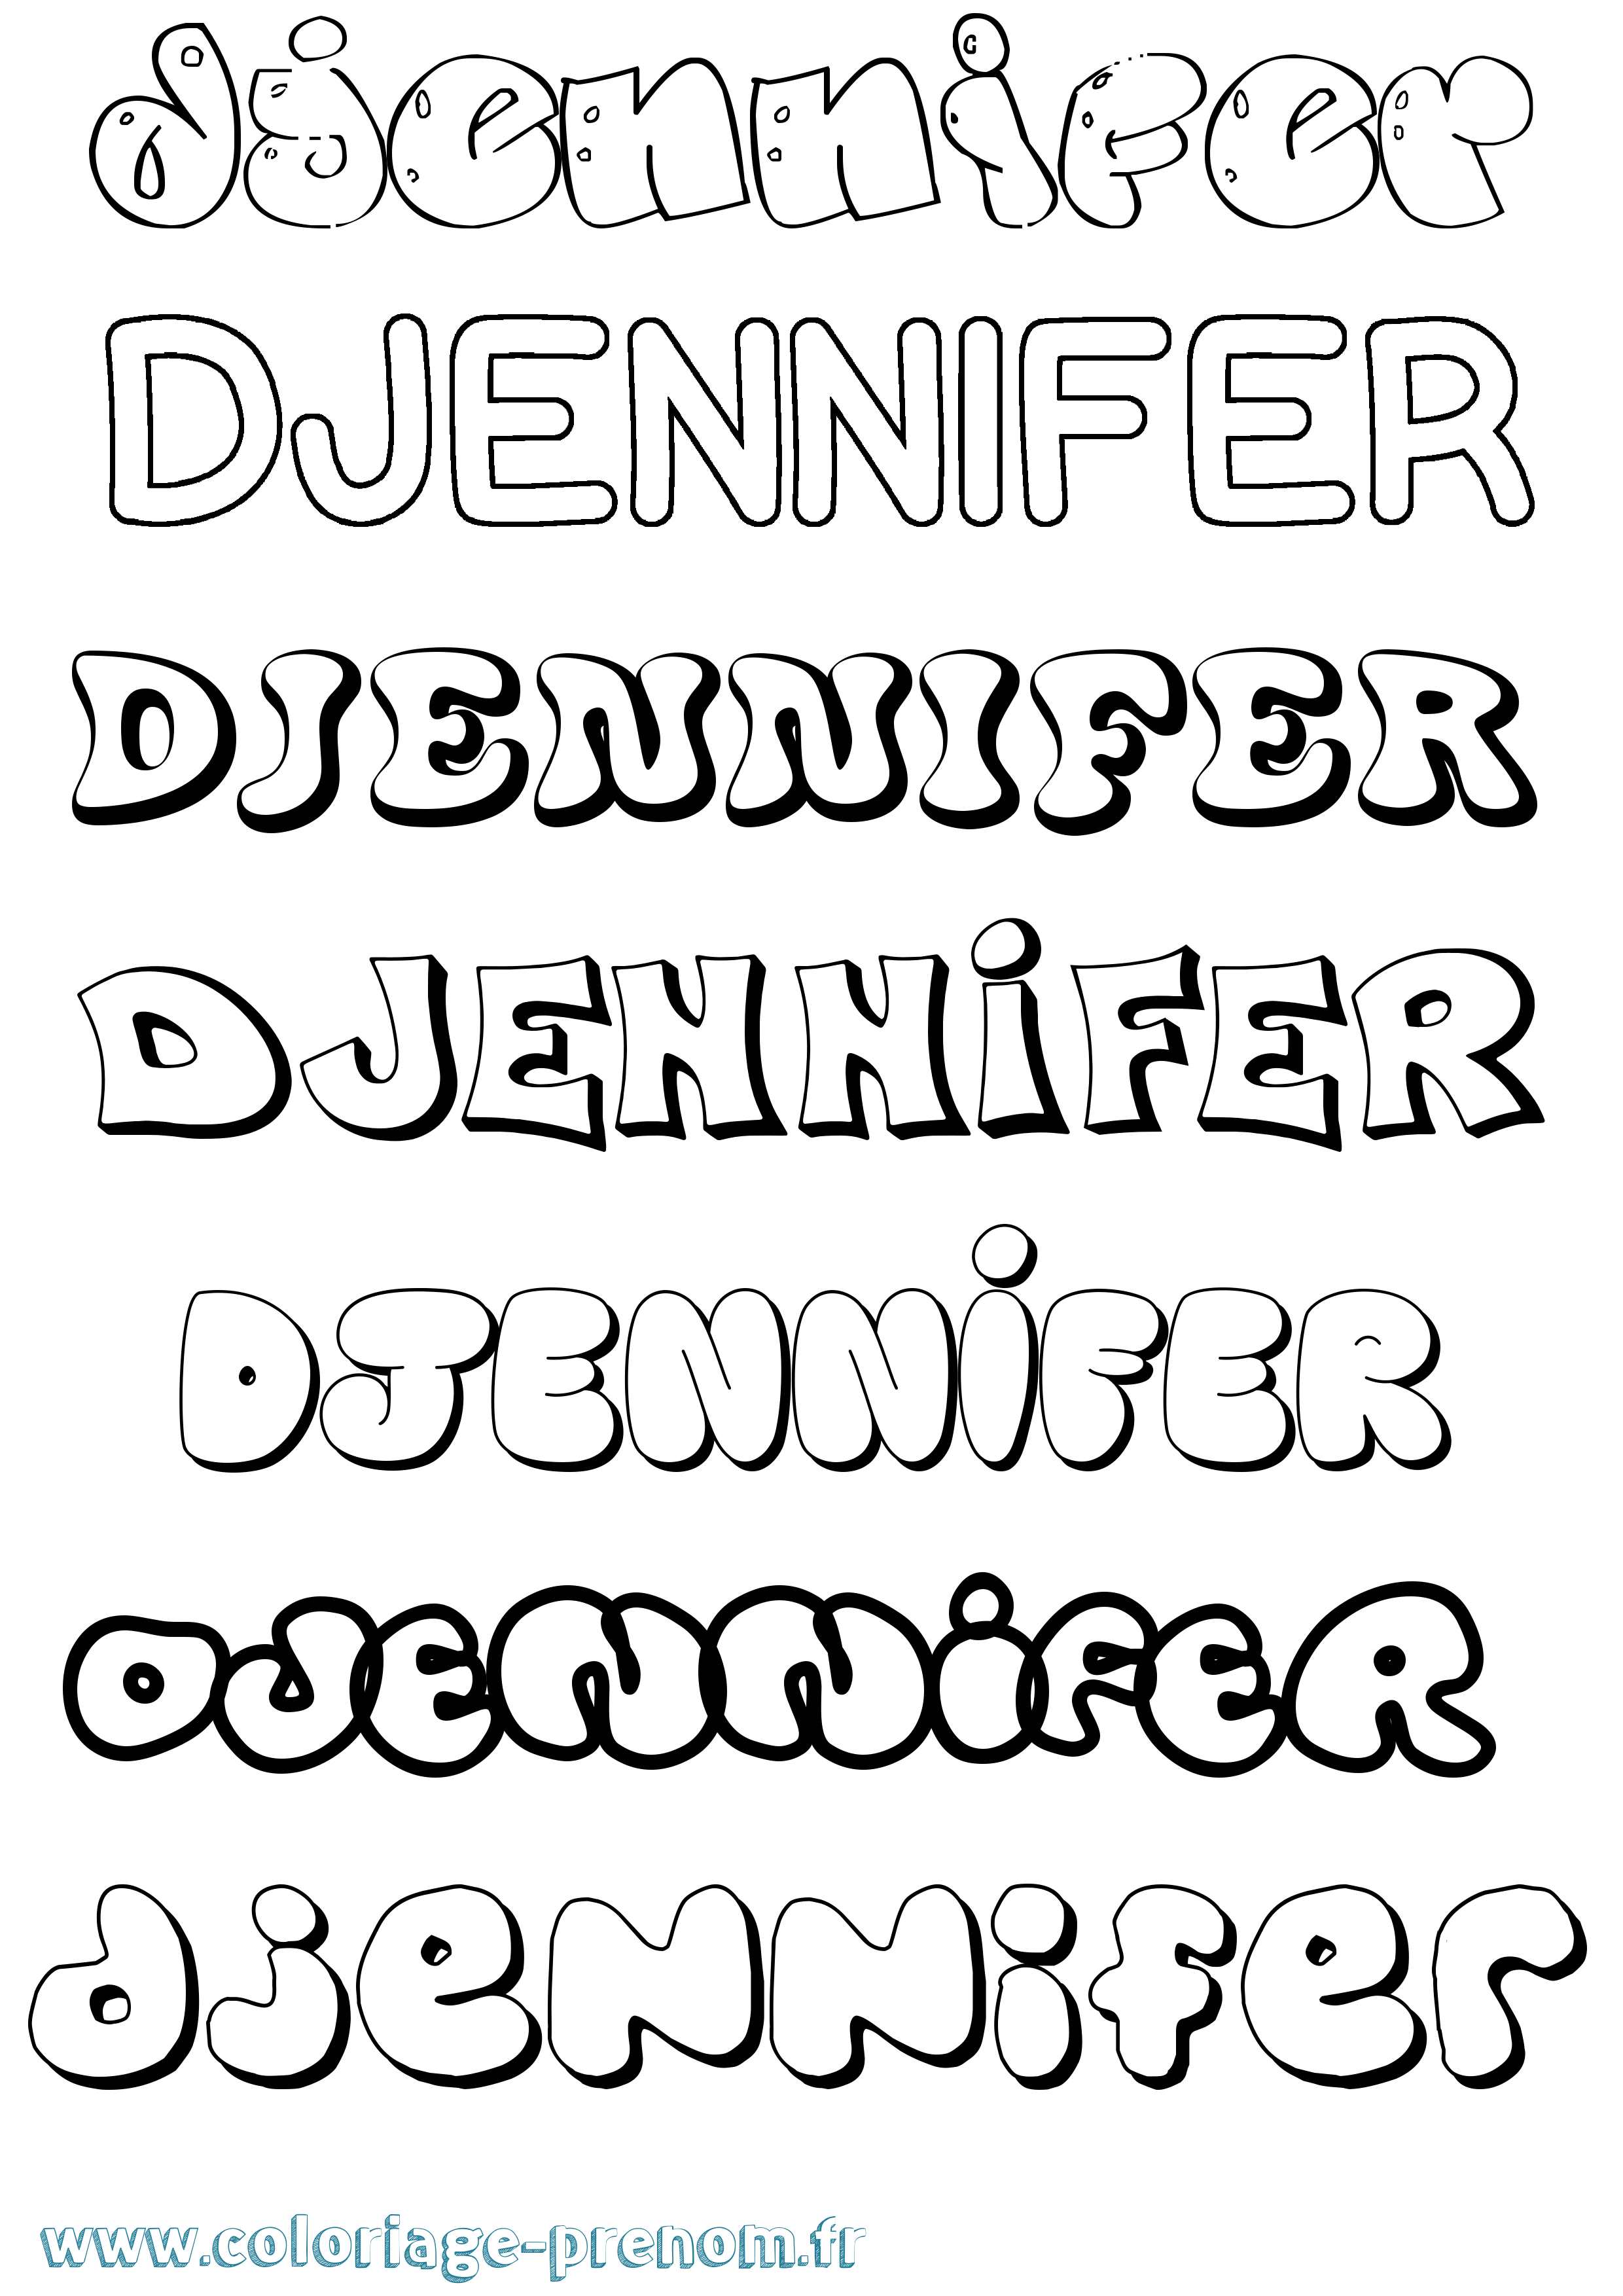 Coloriage prénom Djennifer Bubble